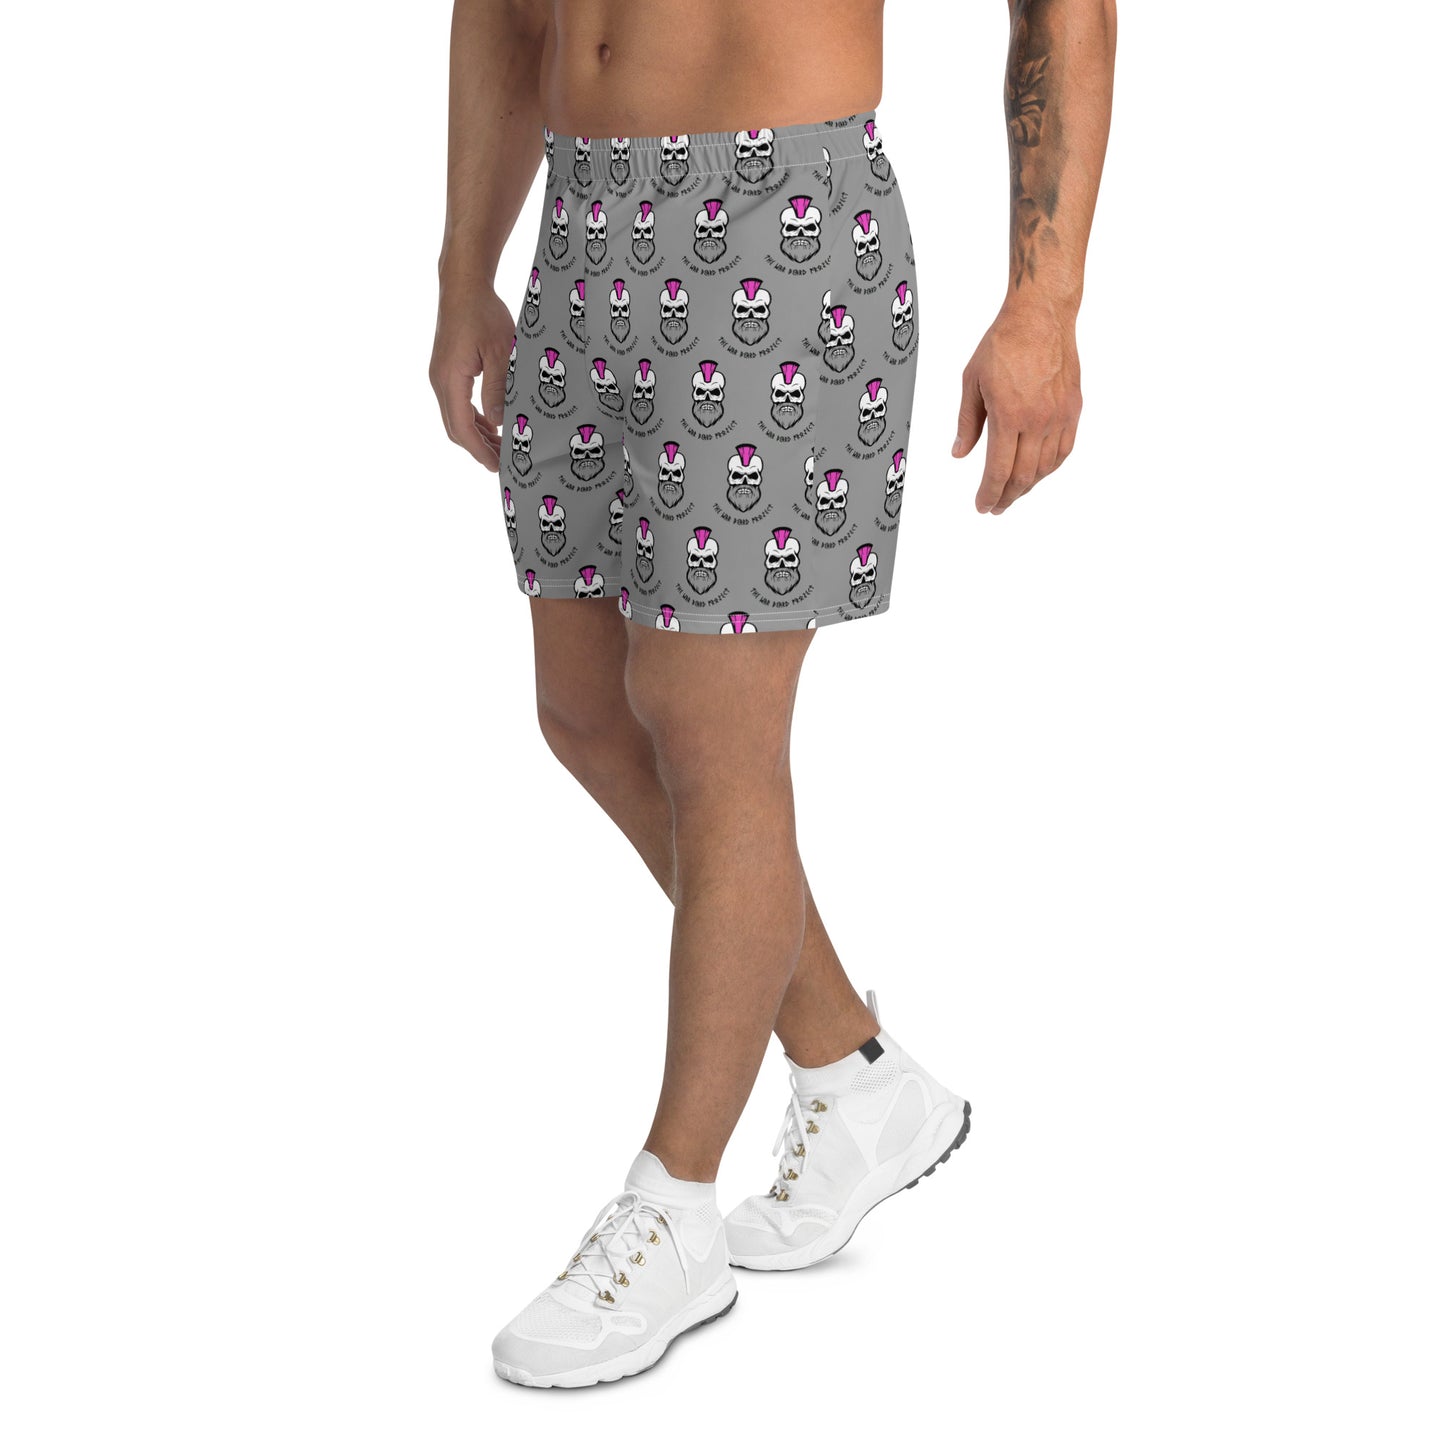 OG Logo Men's Recycled Athletic Shorts